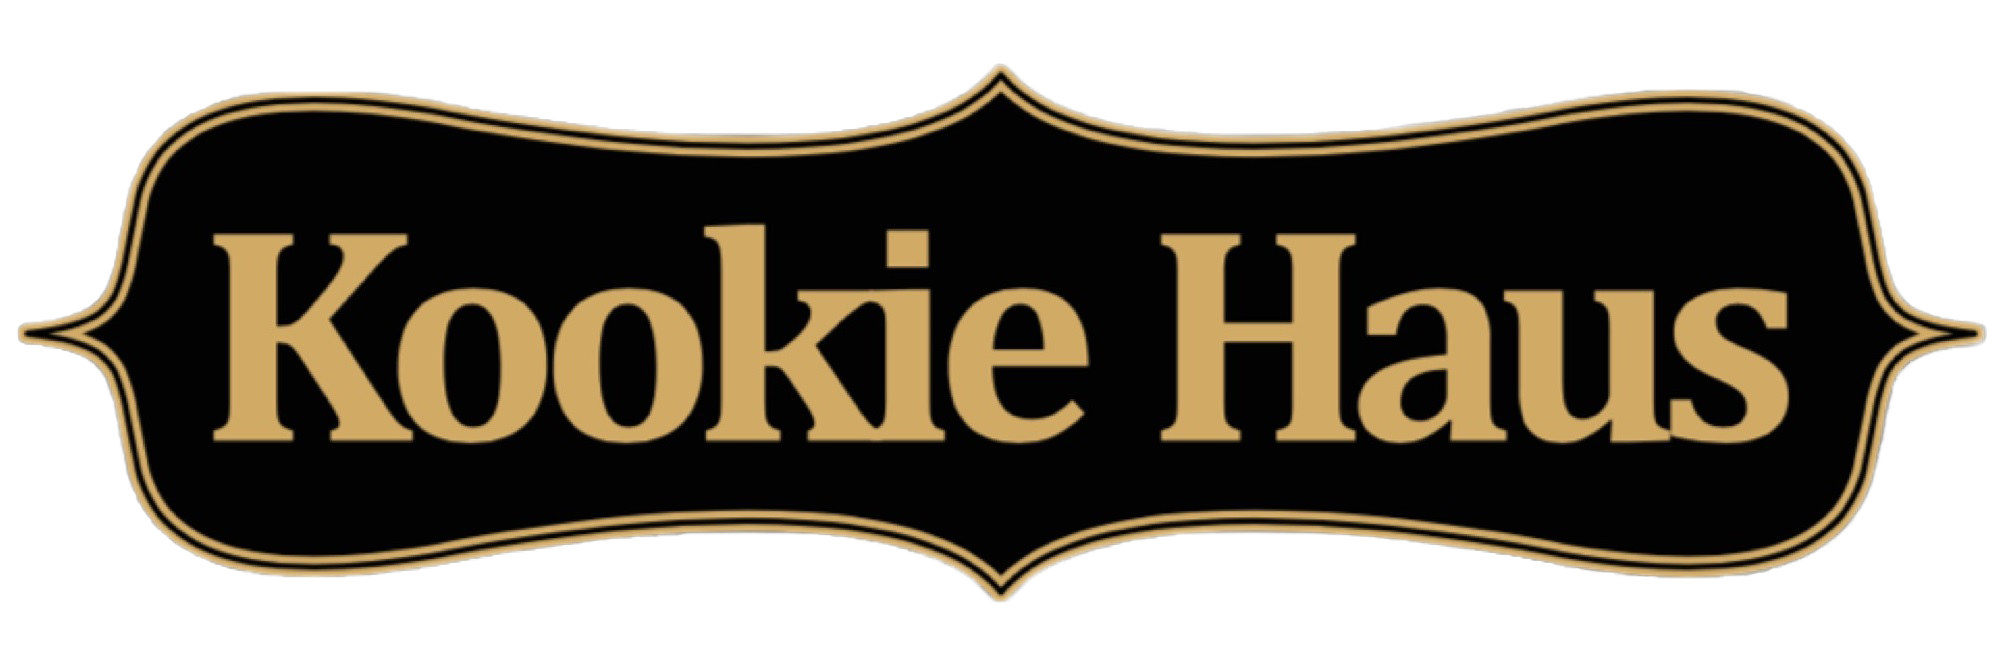 Kookie Haus logo